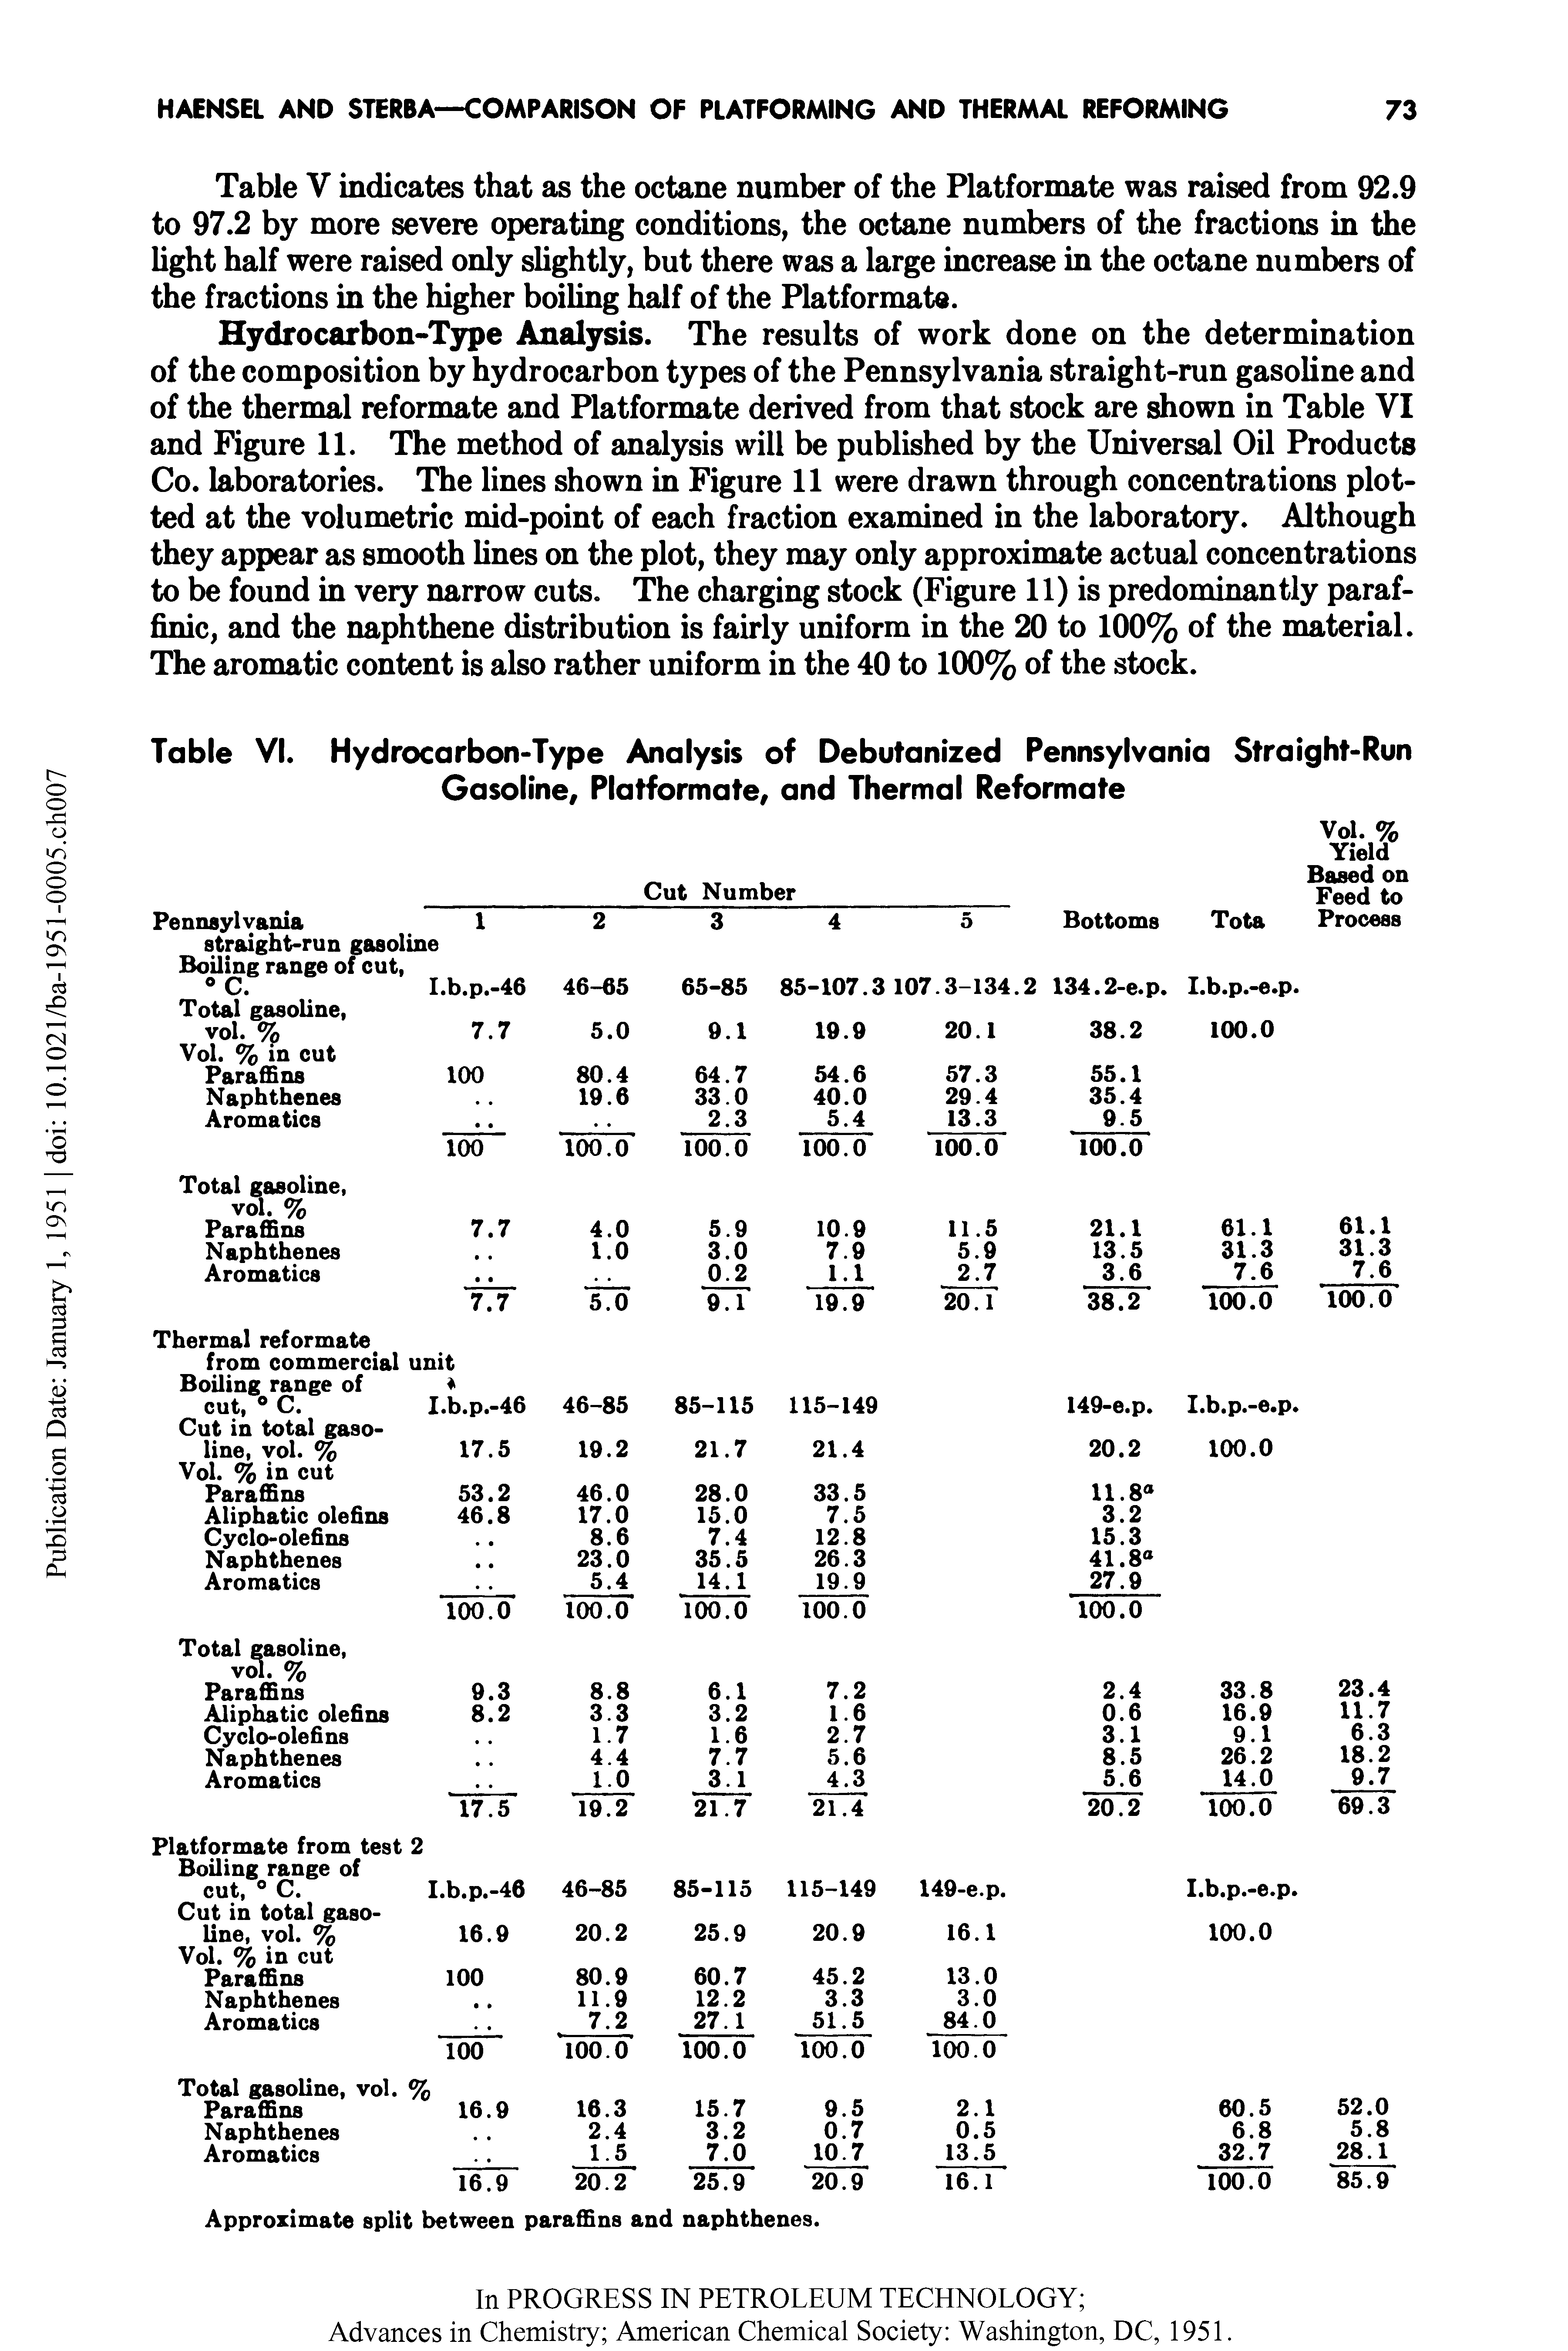 Table VI. Hydrocarbon-Type Analysis of Debutanized Pennsylvania Straight-Run Gasoline, Platformate, and Thermal Reformate...